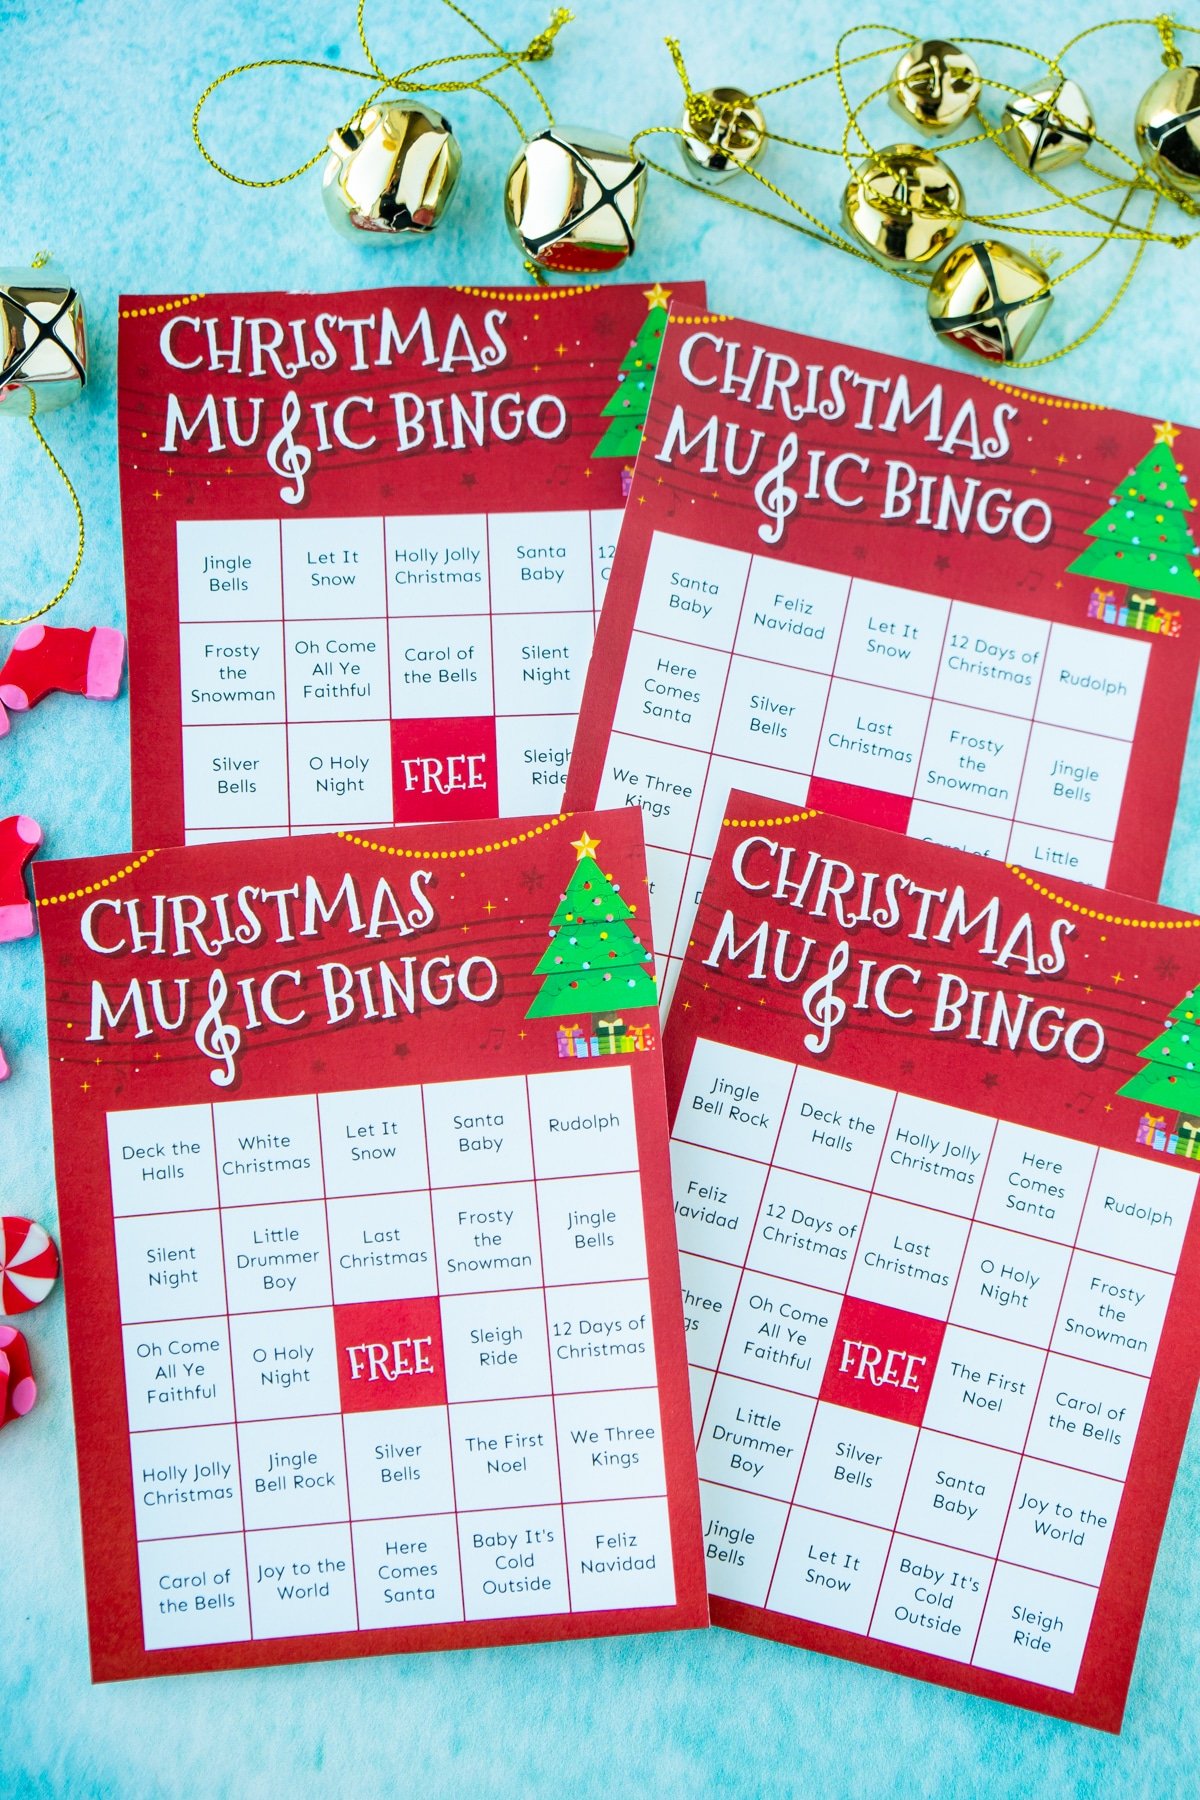 Four Christmas music bingo cards